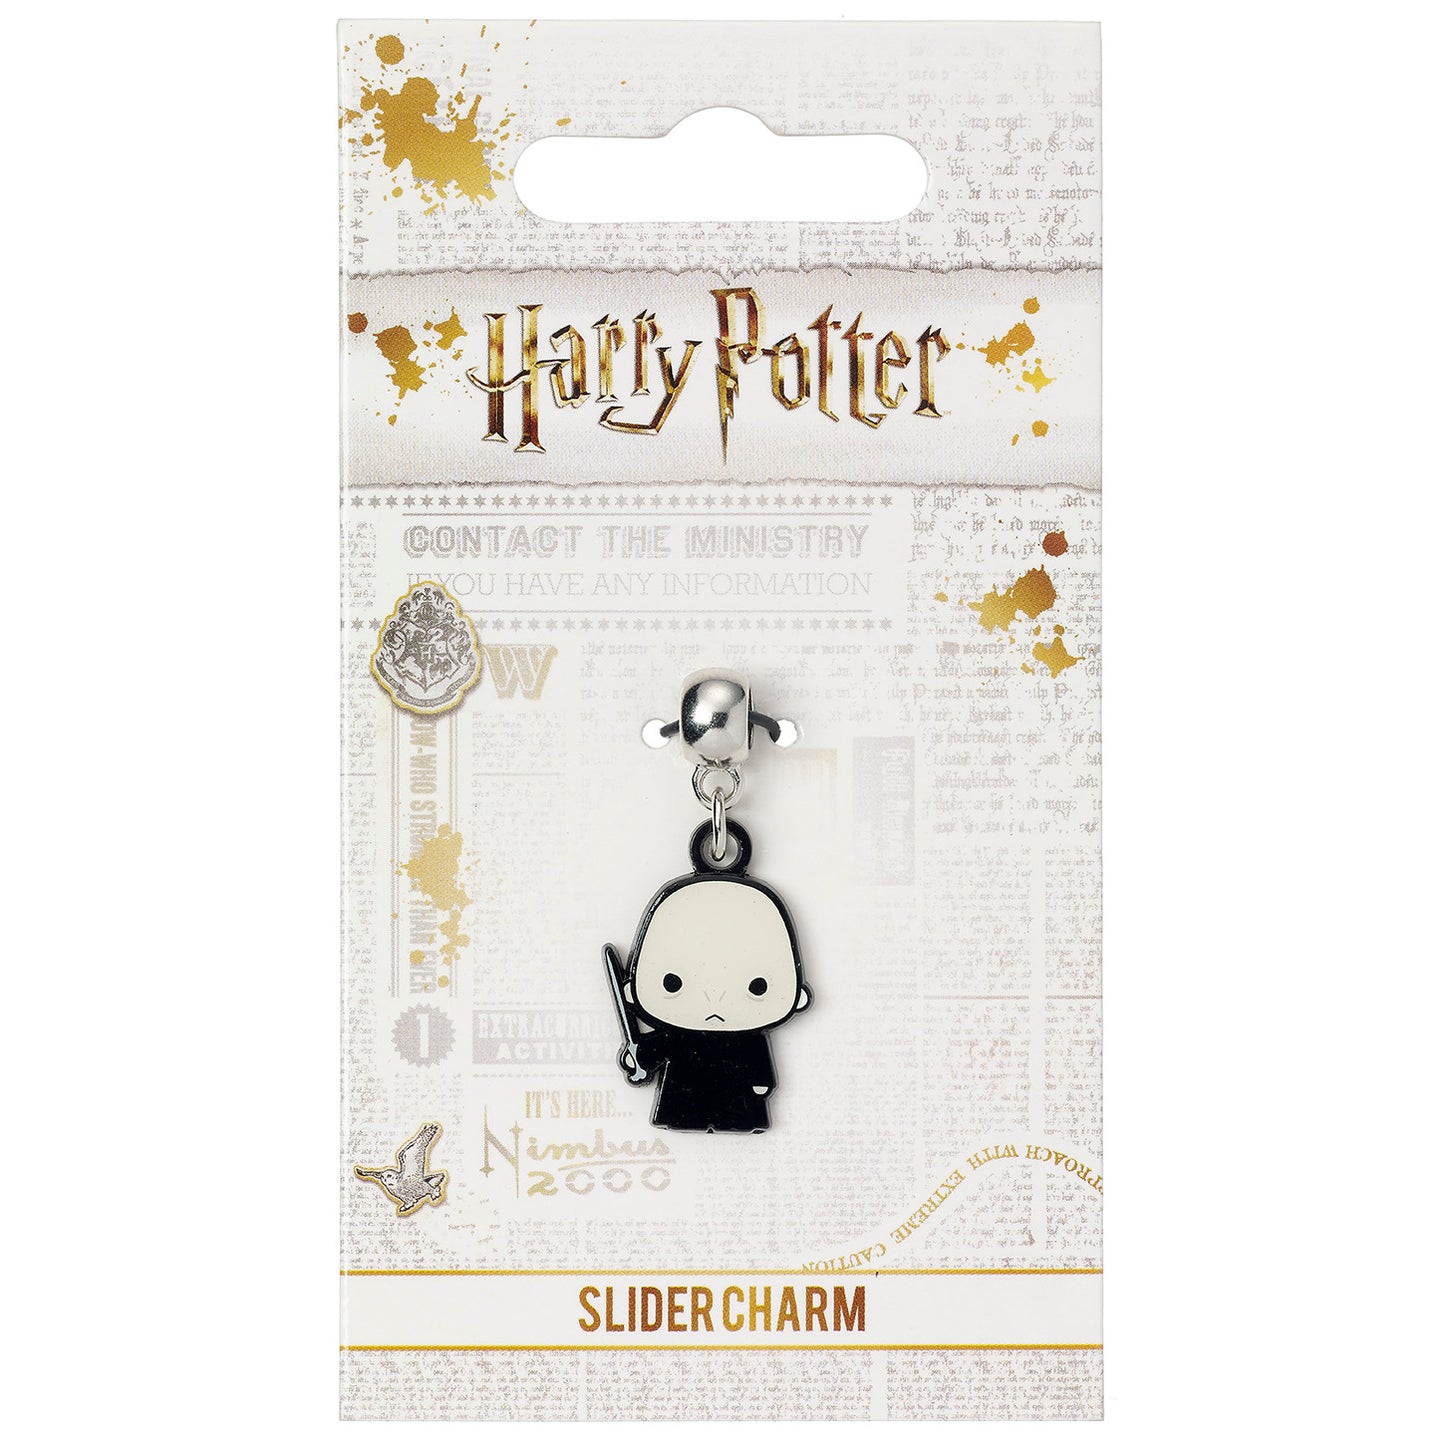 Harry Potter Lord Voldemort Slider Charm - Black